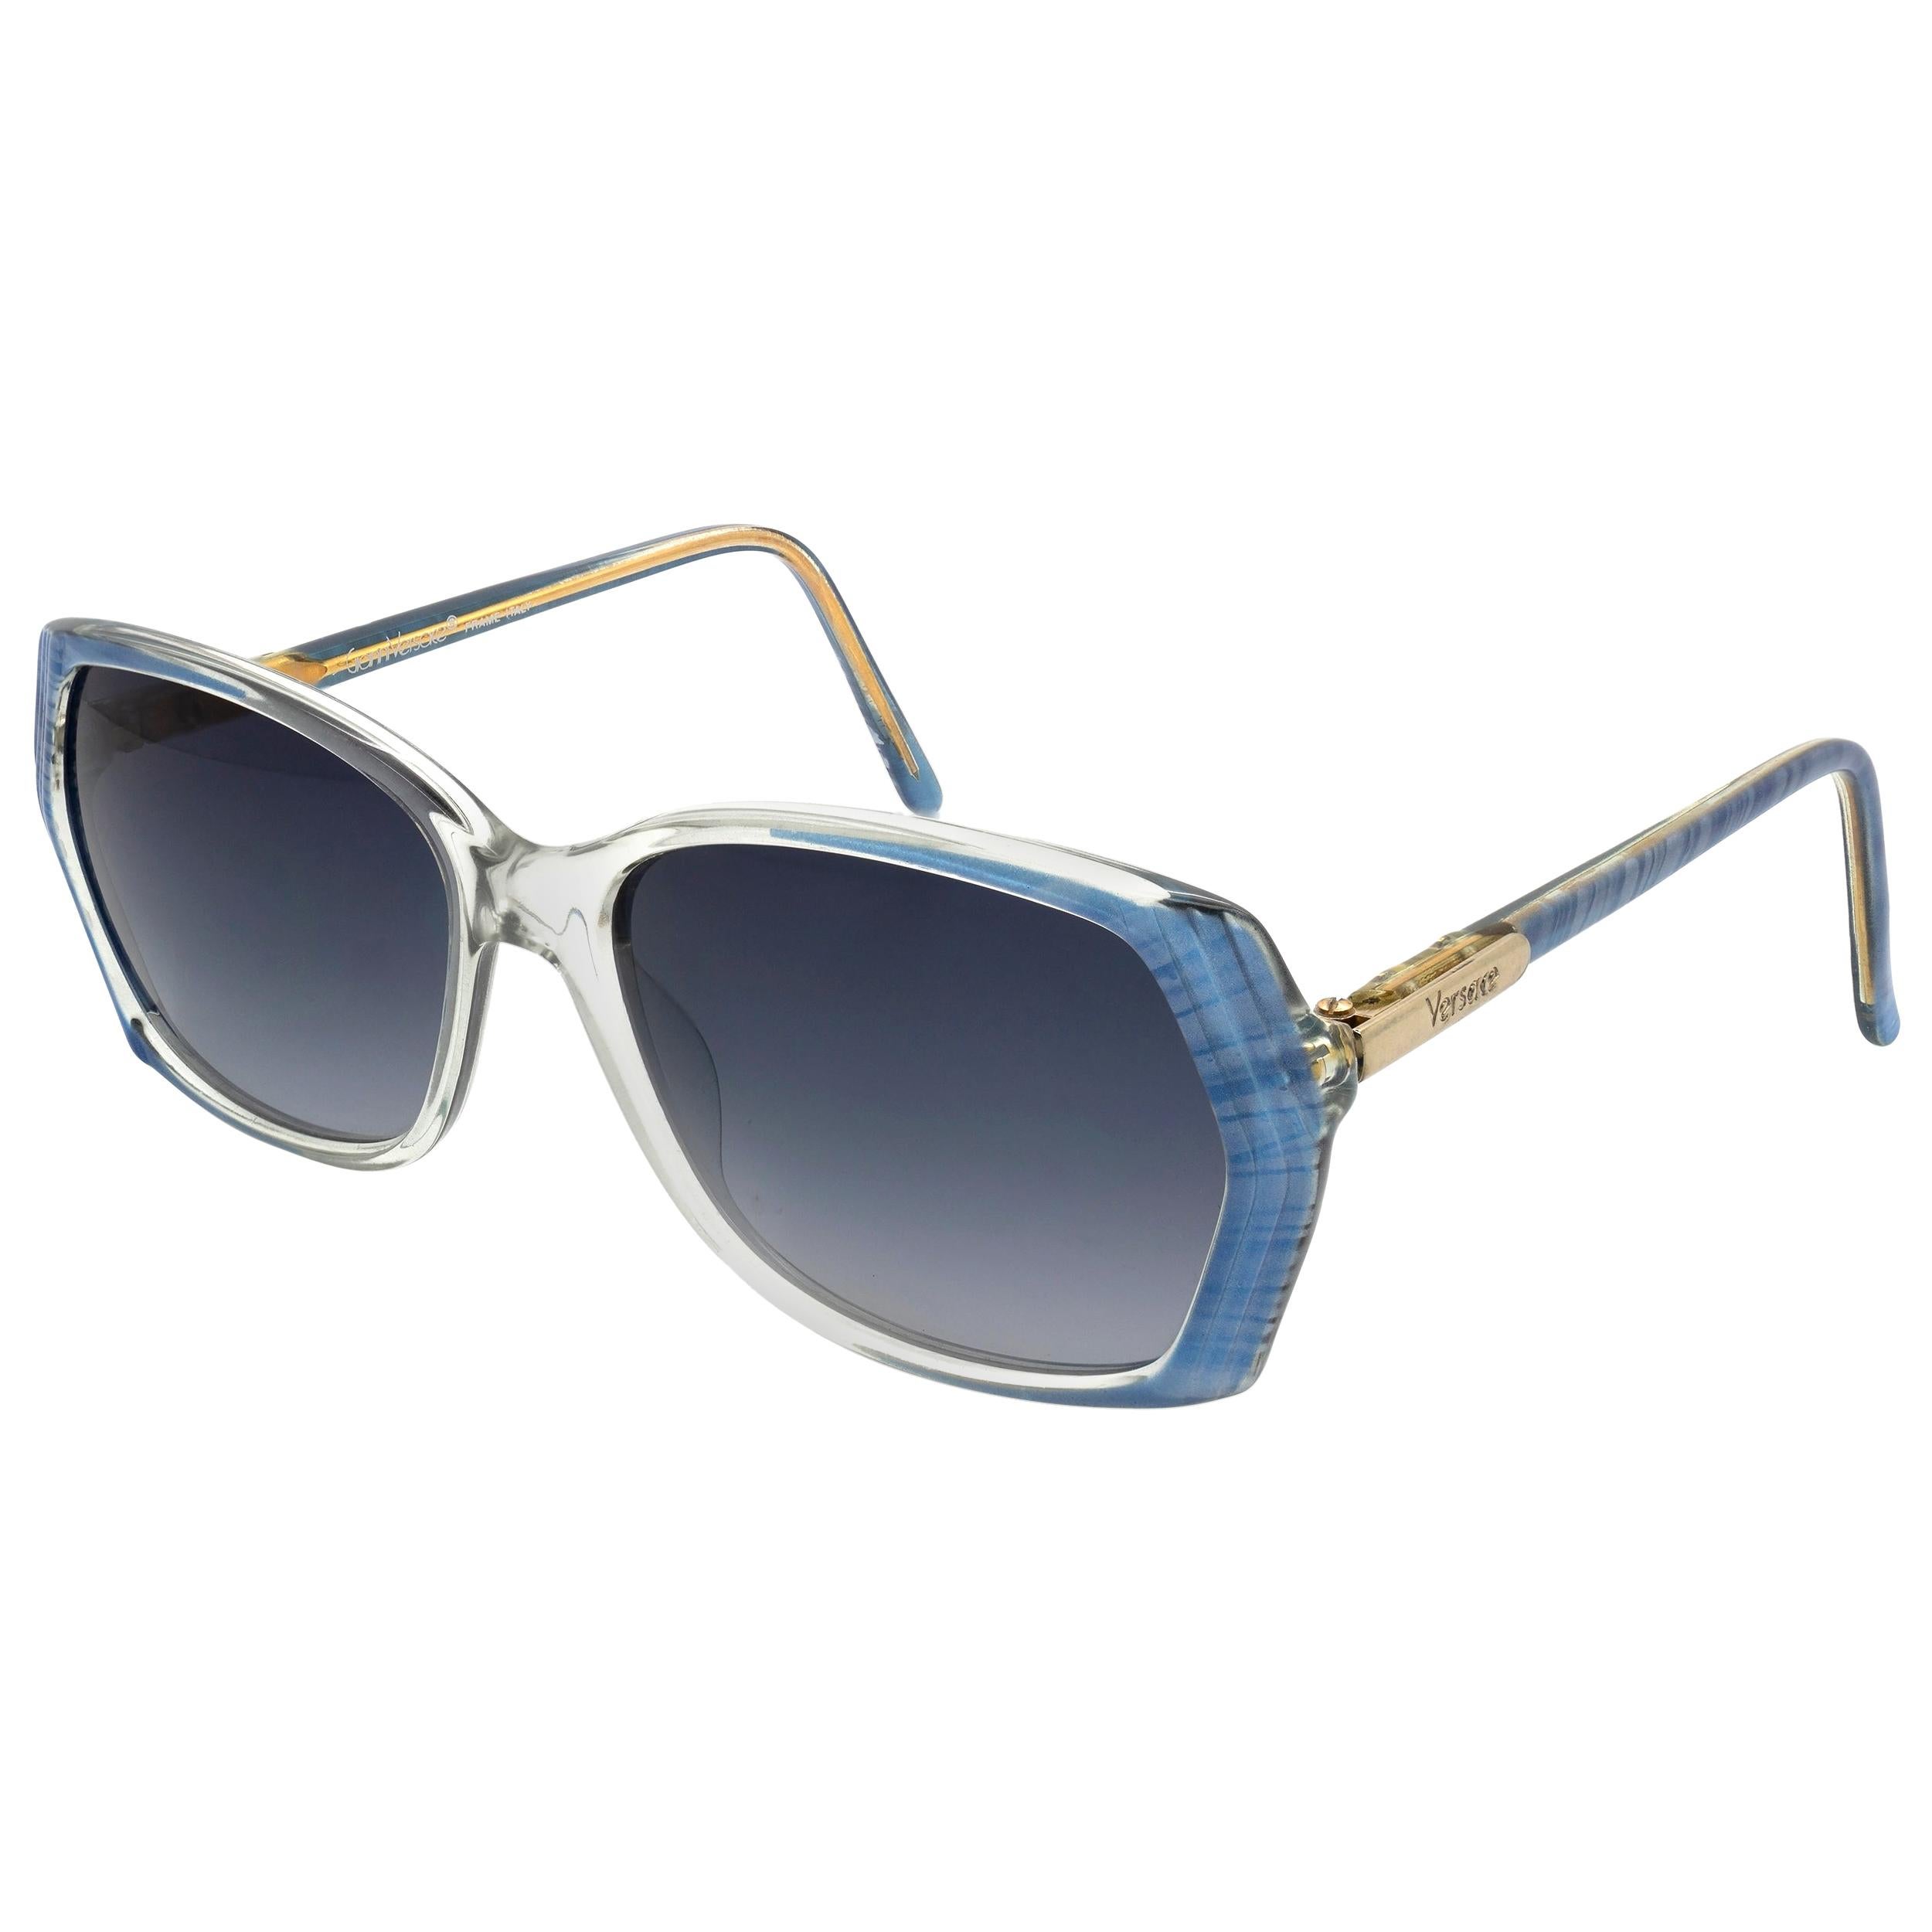 Gianni Versace vintage sunglasses 80s For Sale